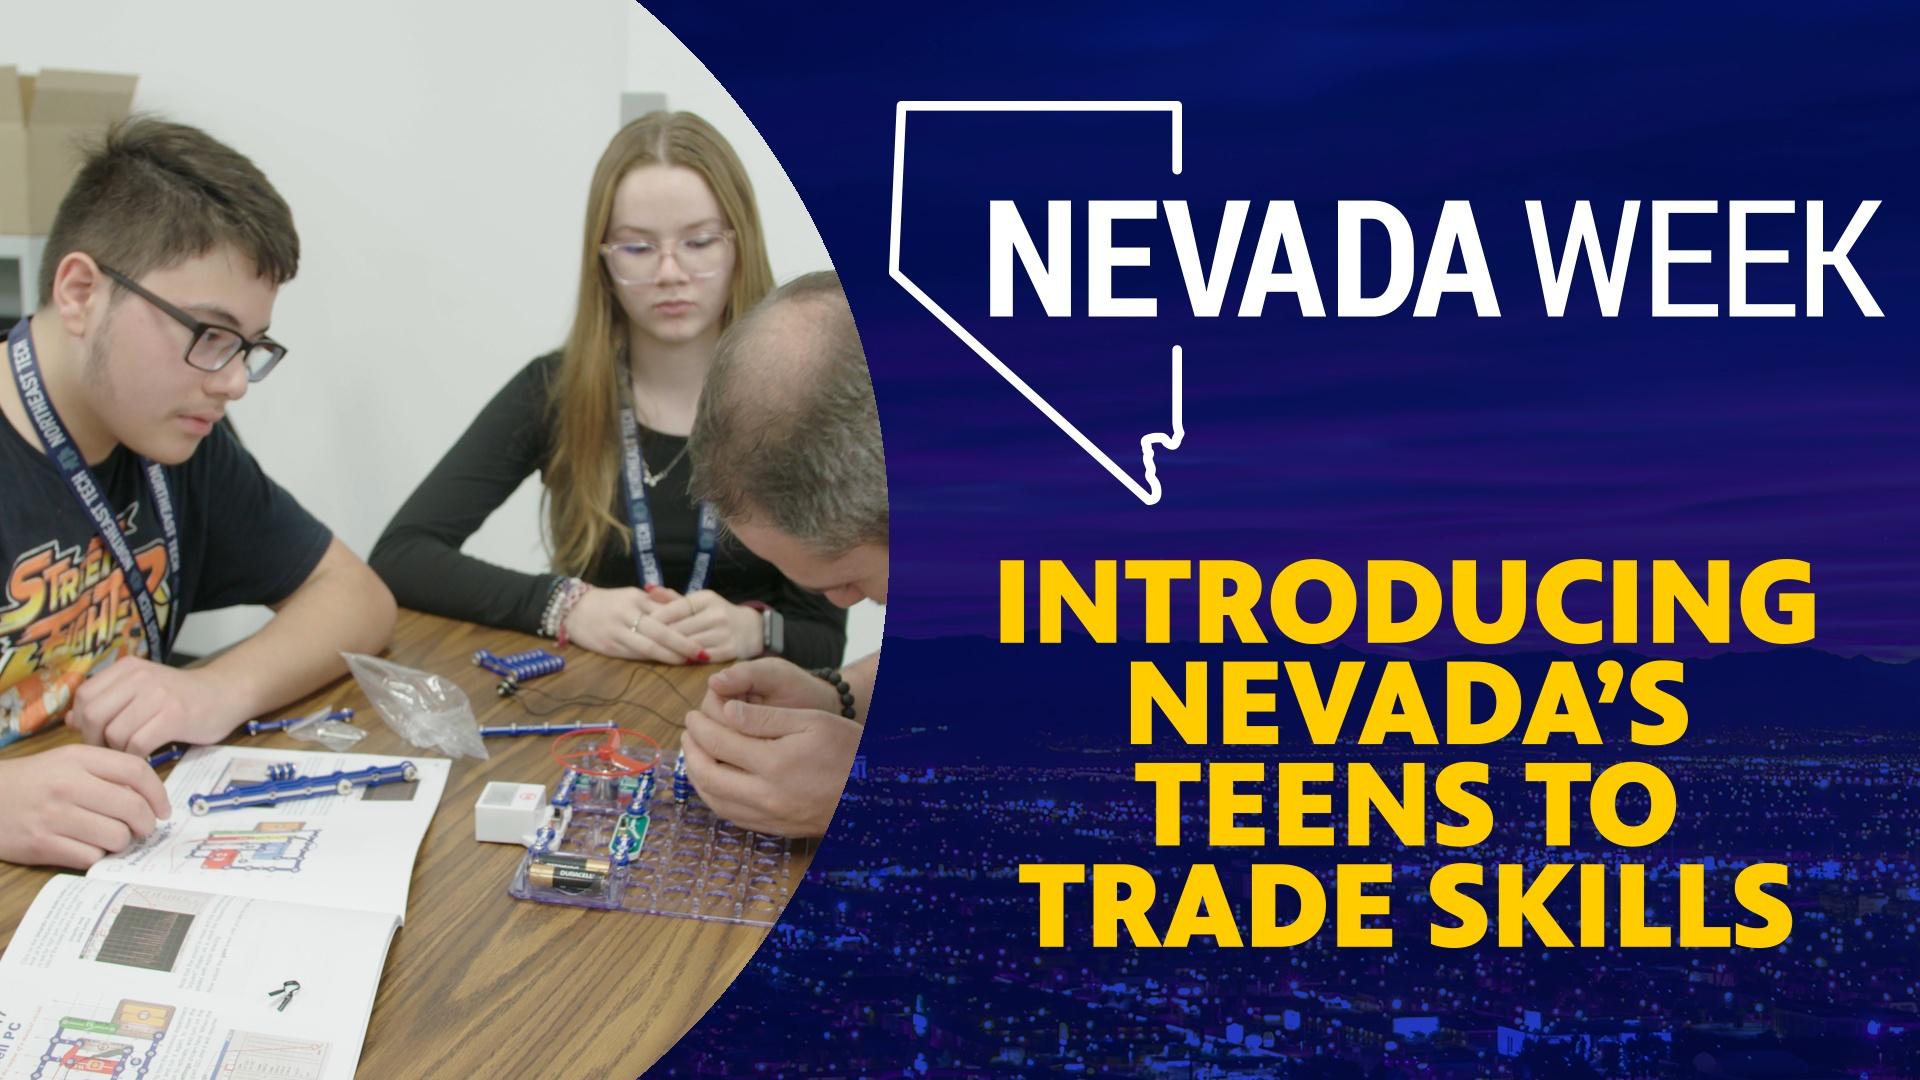 Introducing Nevada’s teens to trade skills